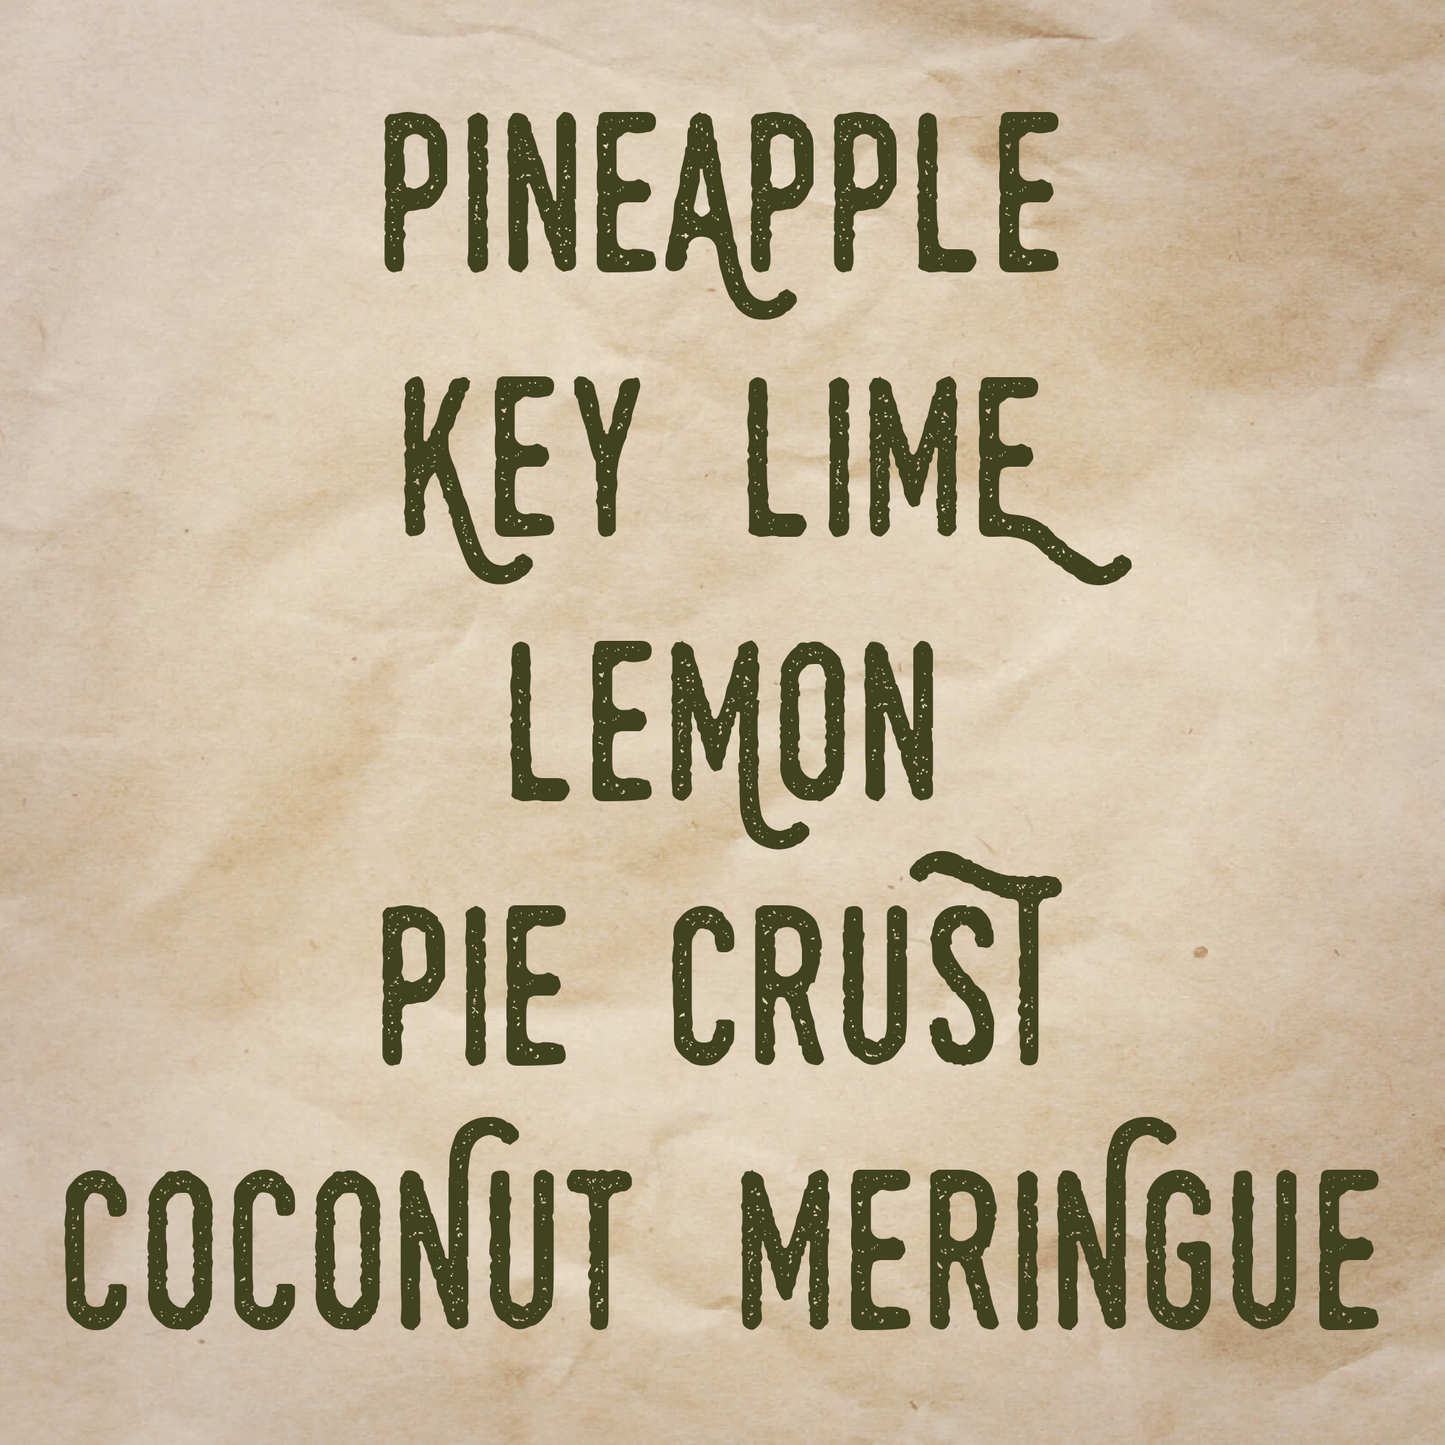 Ectoplasm scent notes: Pineapple, Key lime, lemon, pie crust, and coconut meringue.